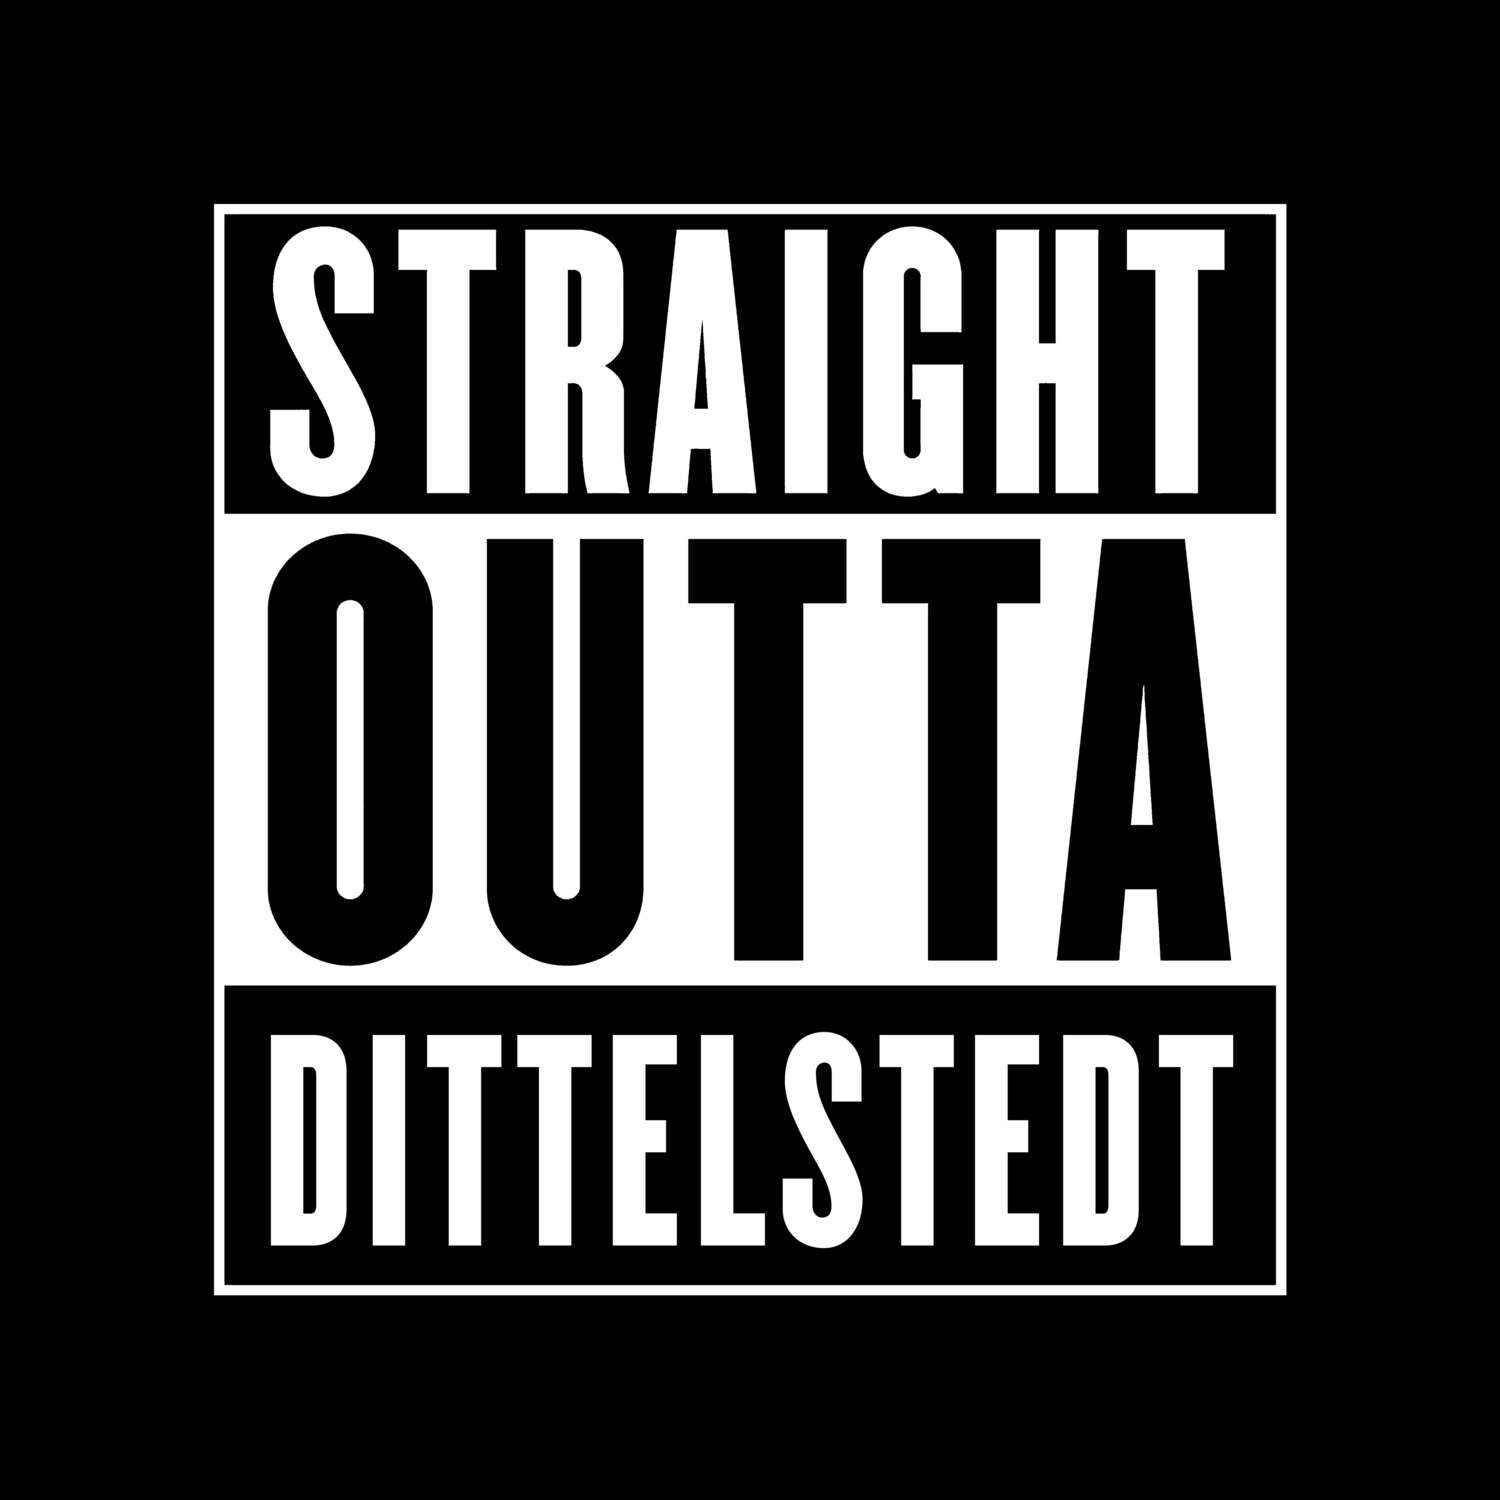 Dittelstedt T-Shirt »Straight Outta«